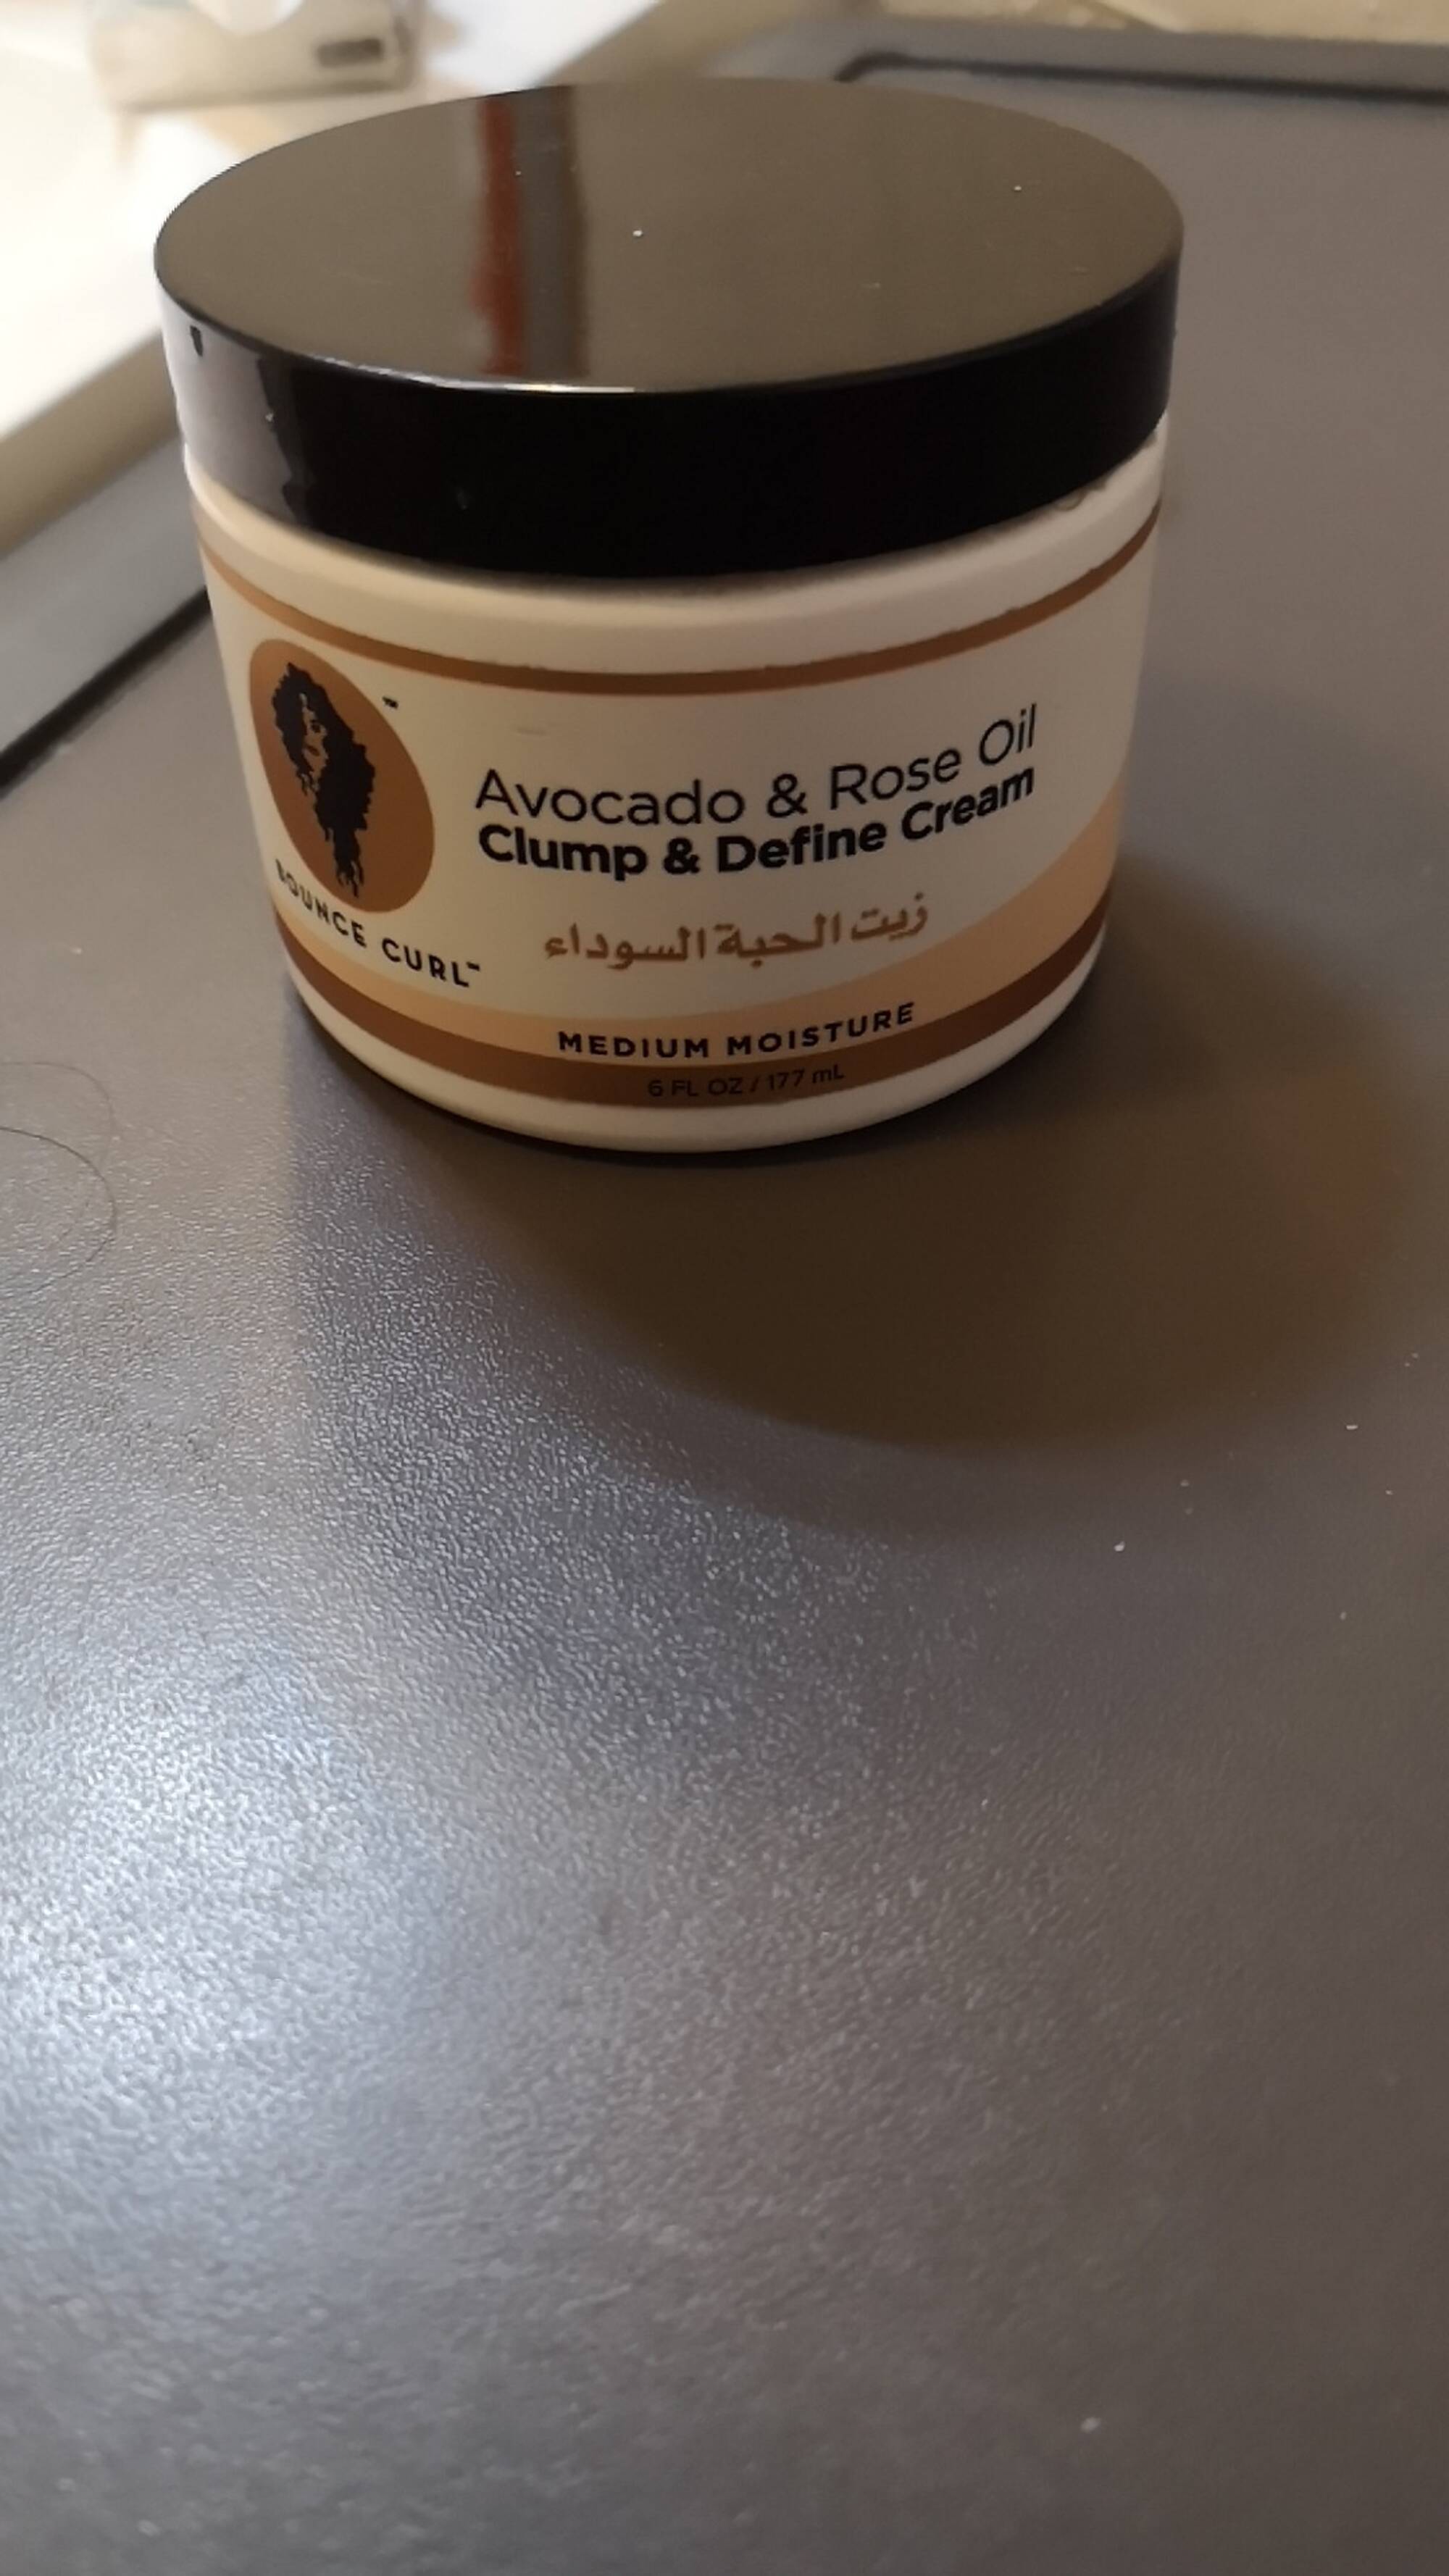 BOUNCE CURL - Avocado & Rose oil - Clump & define cream